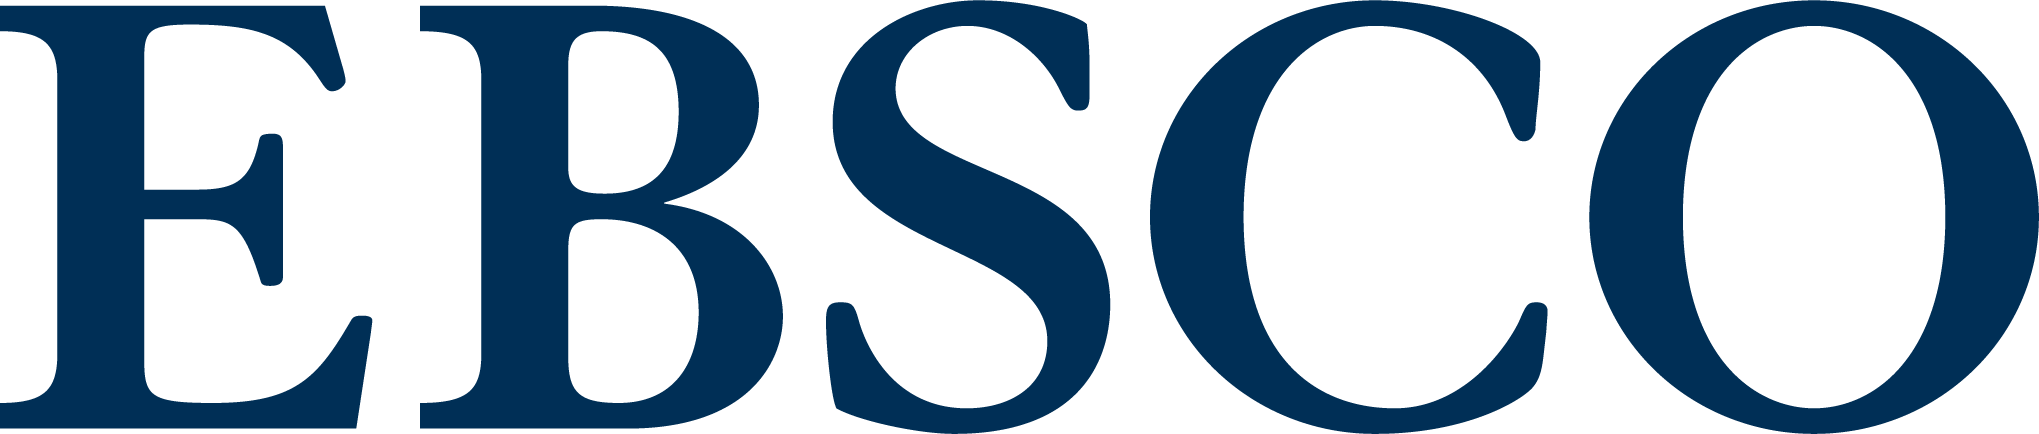 EBSCO Logo RGB